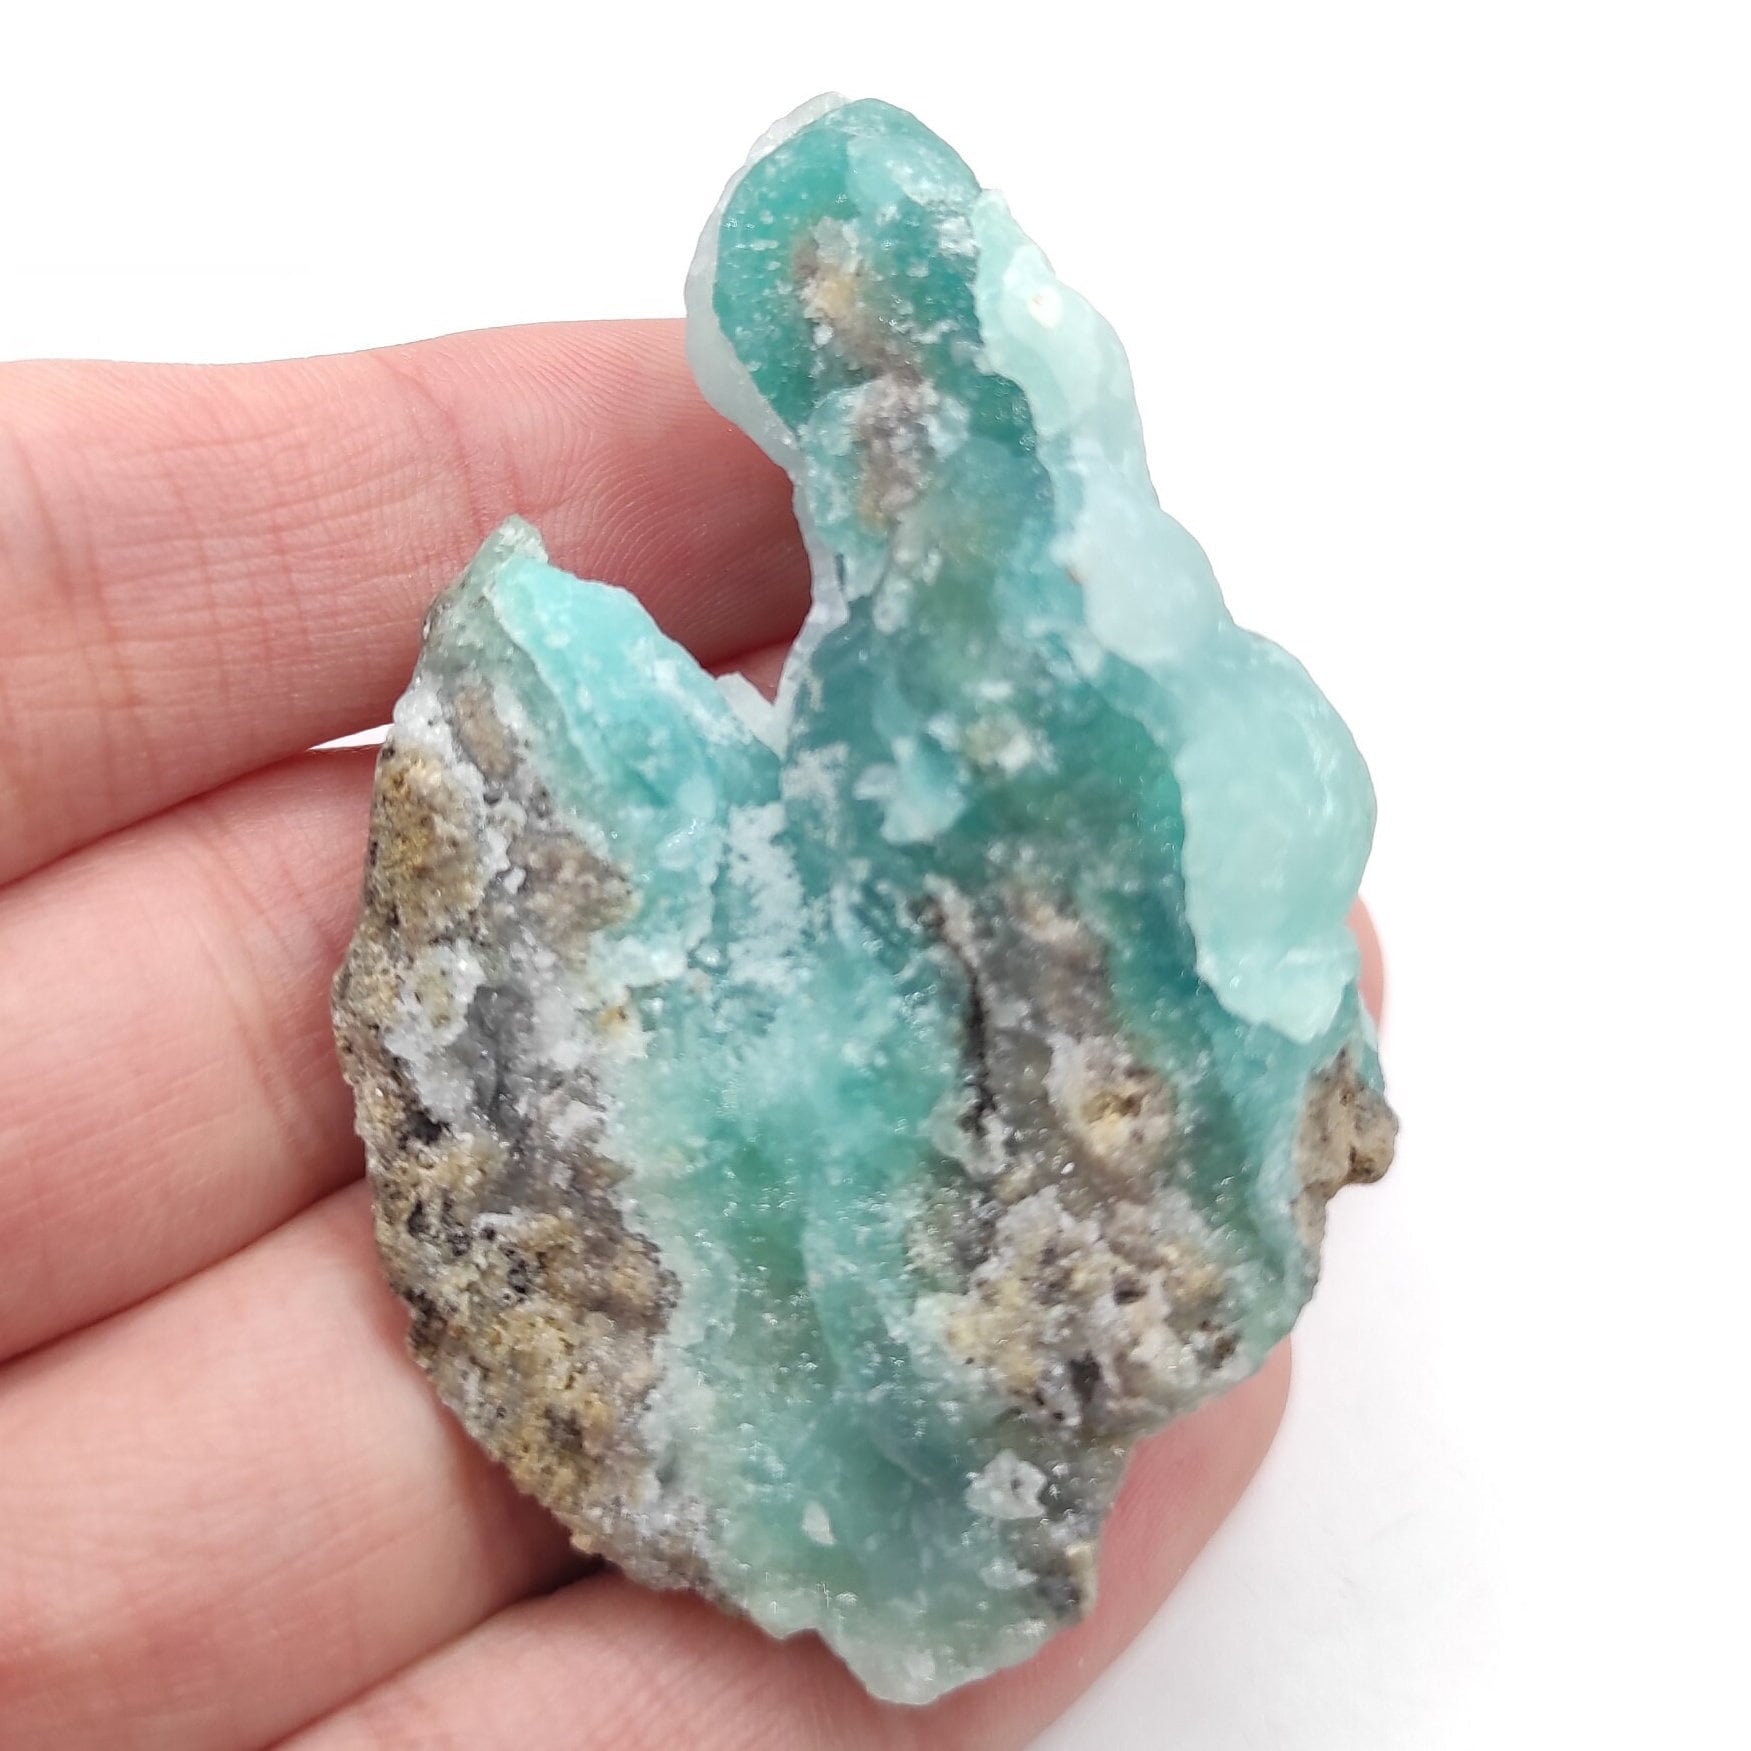 72g Hemimorphite Specimen - High Quality Blue Hemimorphite Mineral Specimen - Palabanda, Republic of Congo - Hemimorphite Crystal